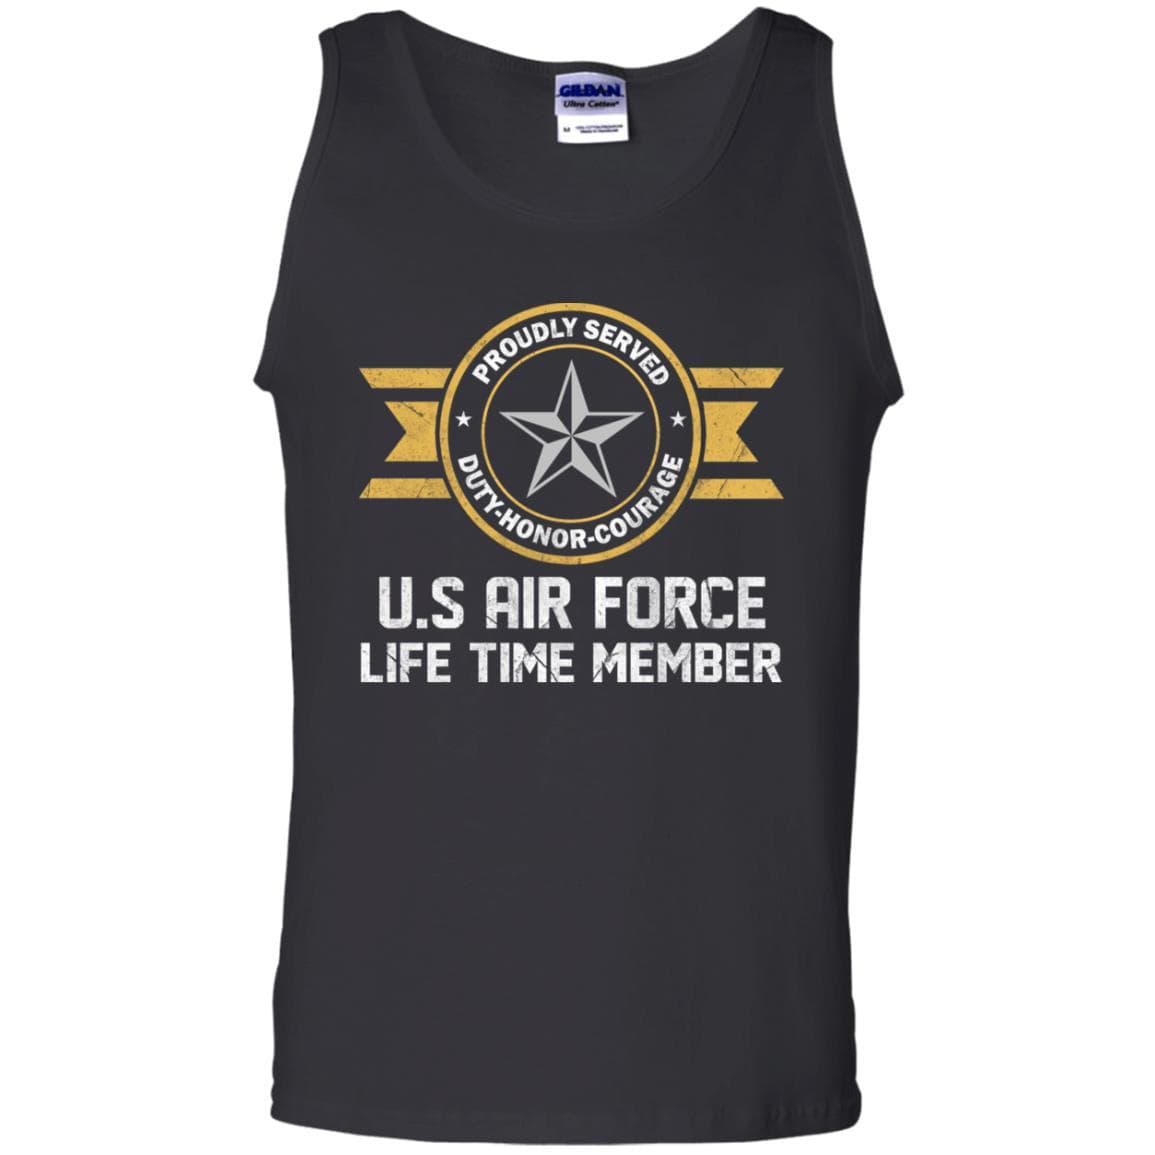 Life time member-US Air Force O-7 Brigadier General Brig O7 General Officer Ranks Men T Shirt On Front-TShirt-USAF-Veterans Nation